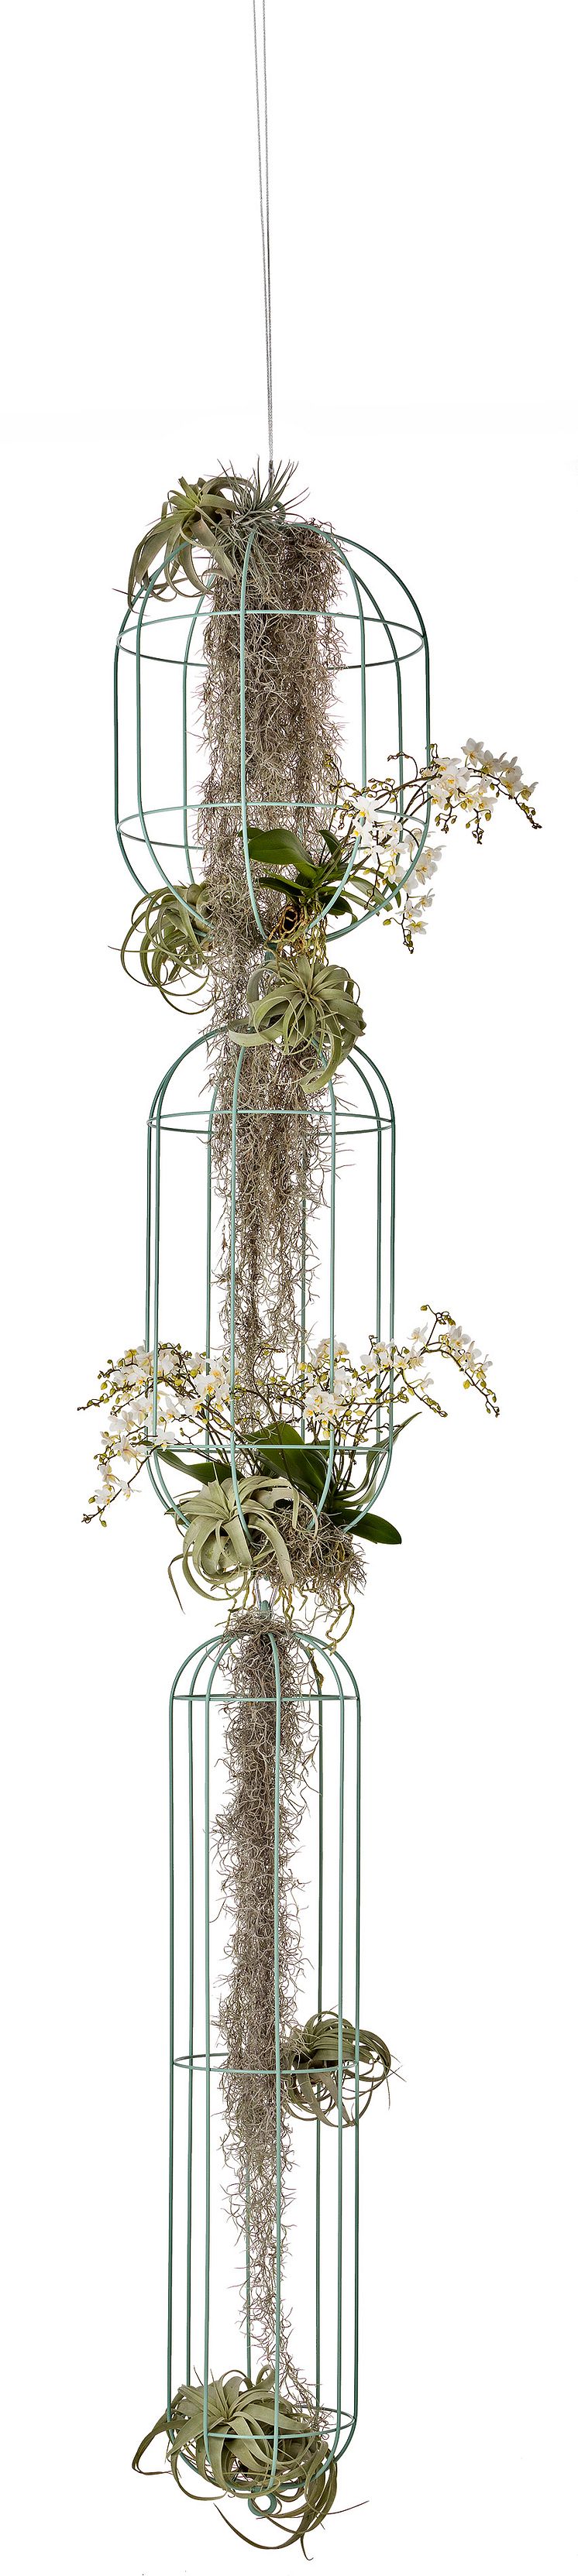 Cacti kokong / Hanging ampel, design Anki Gneib